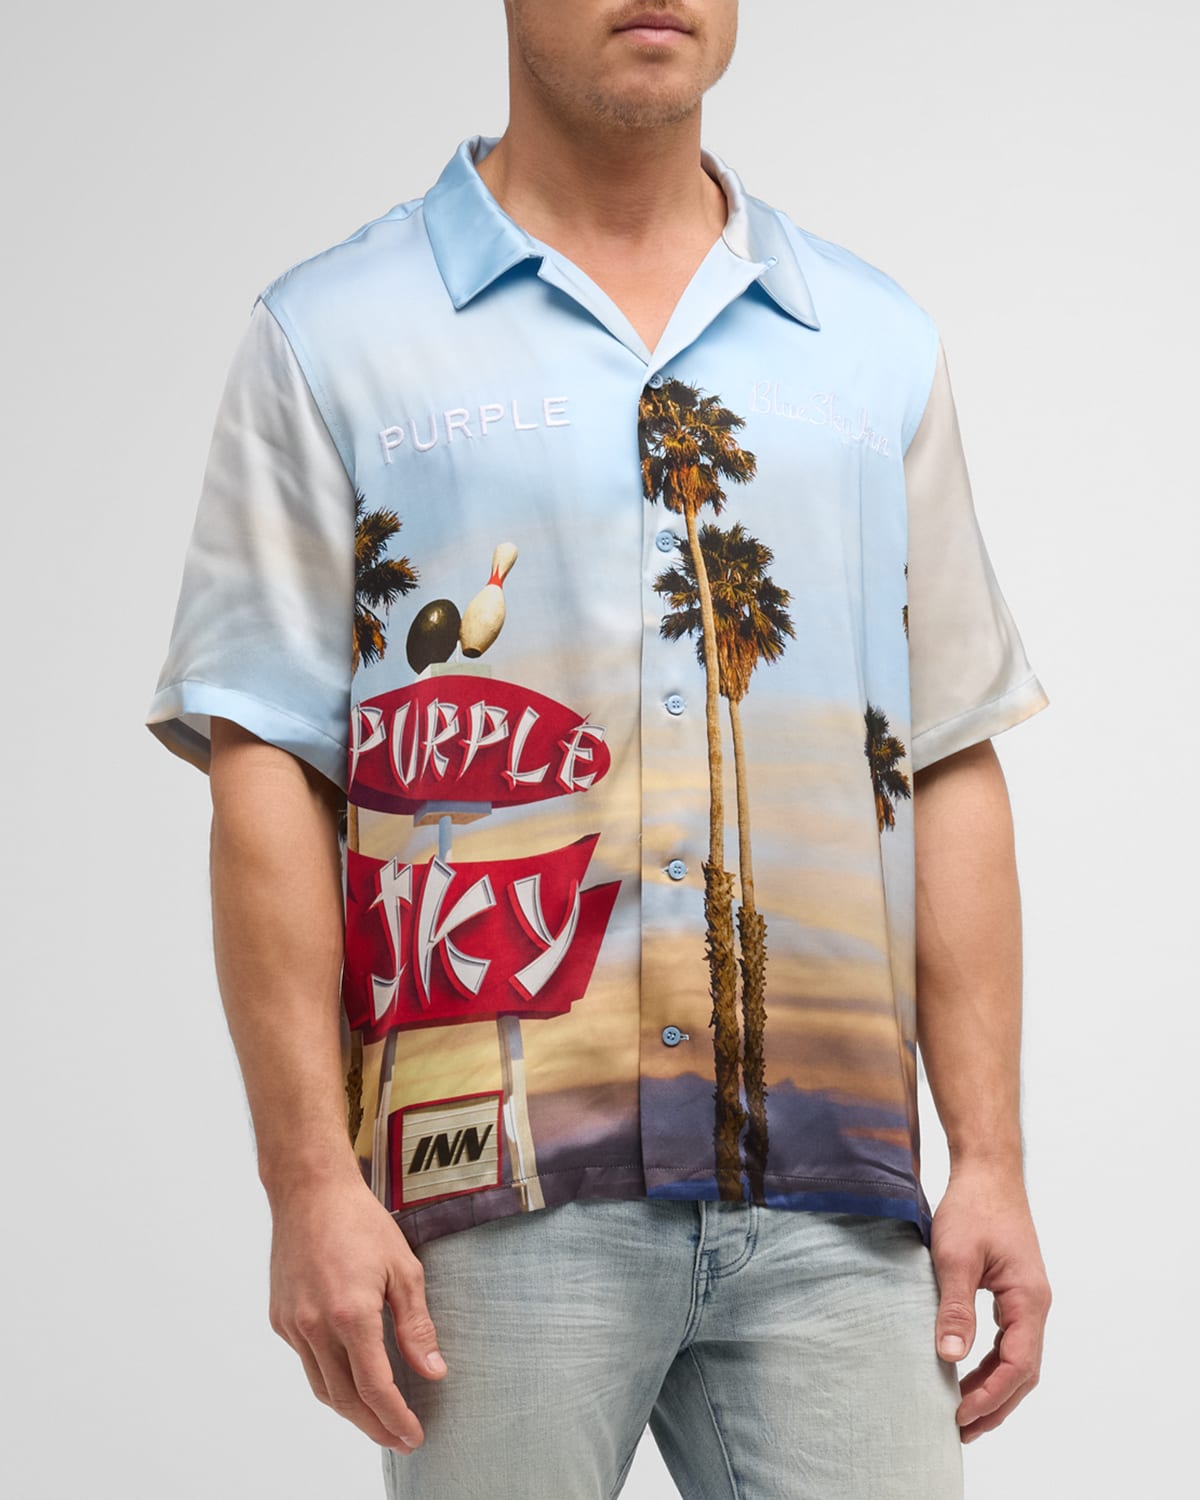 x Blue Sky Men's Printed Camp Shirt